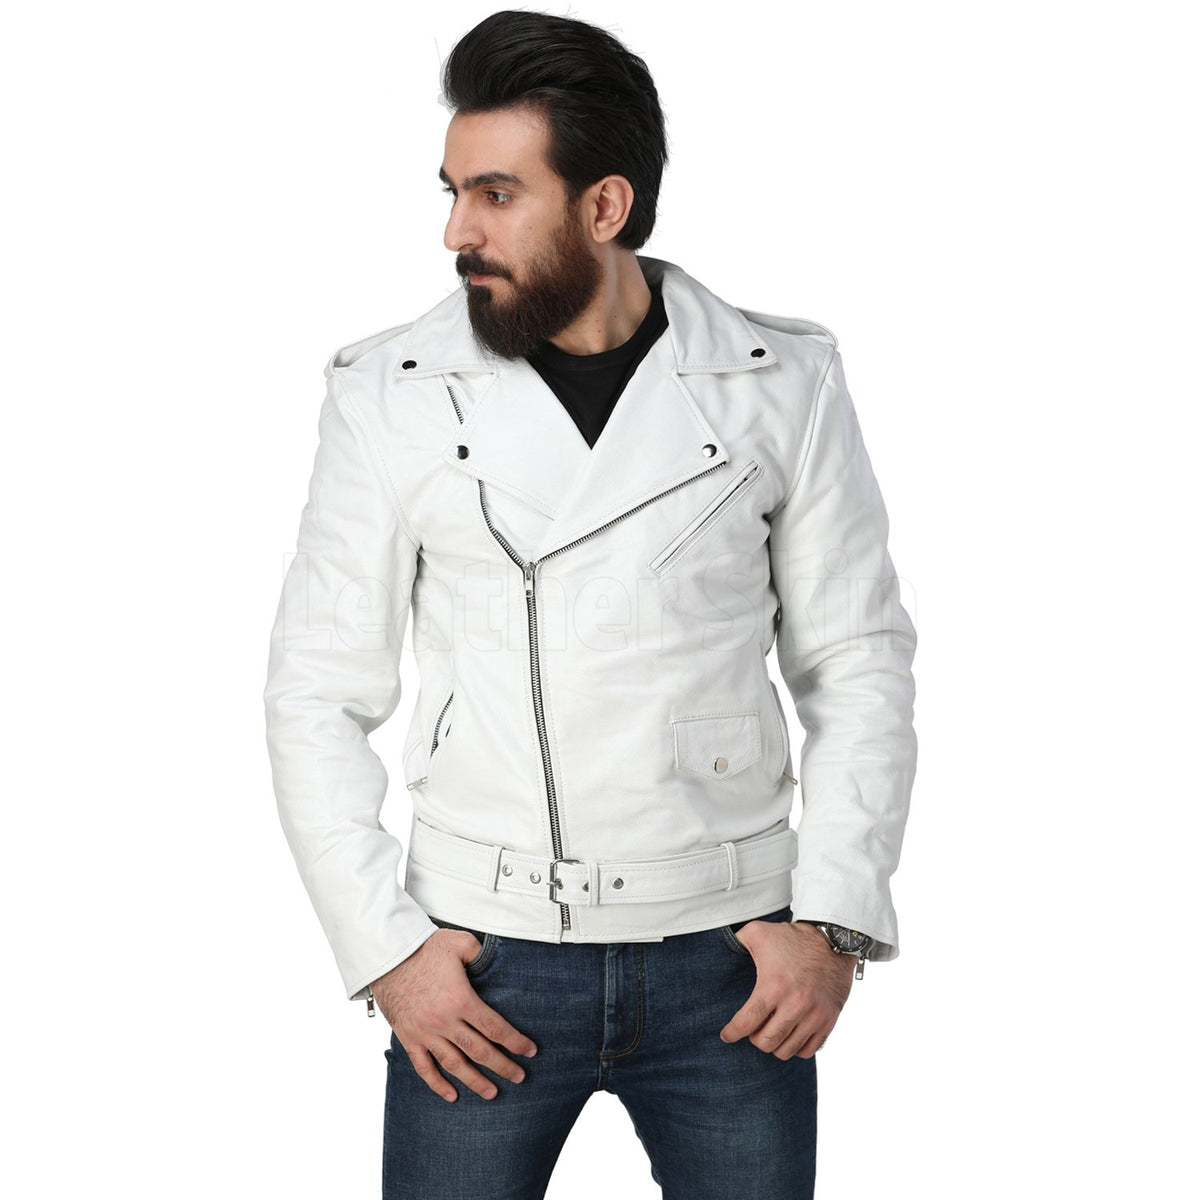 Men's Fashion Printed Denim Genuine Leather Jacket | PalaLeather, Black / XL